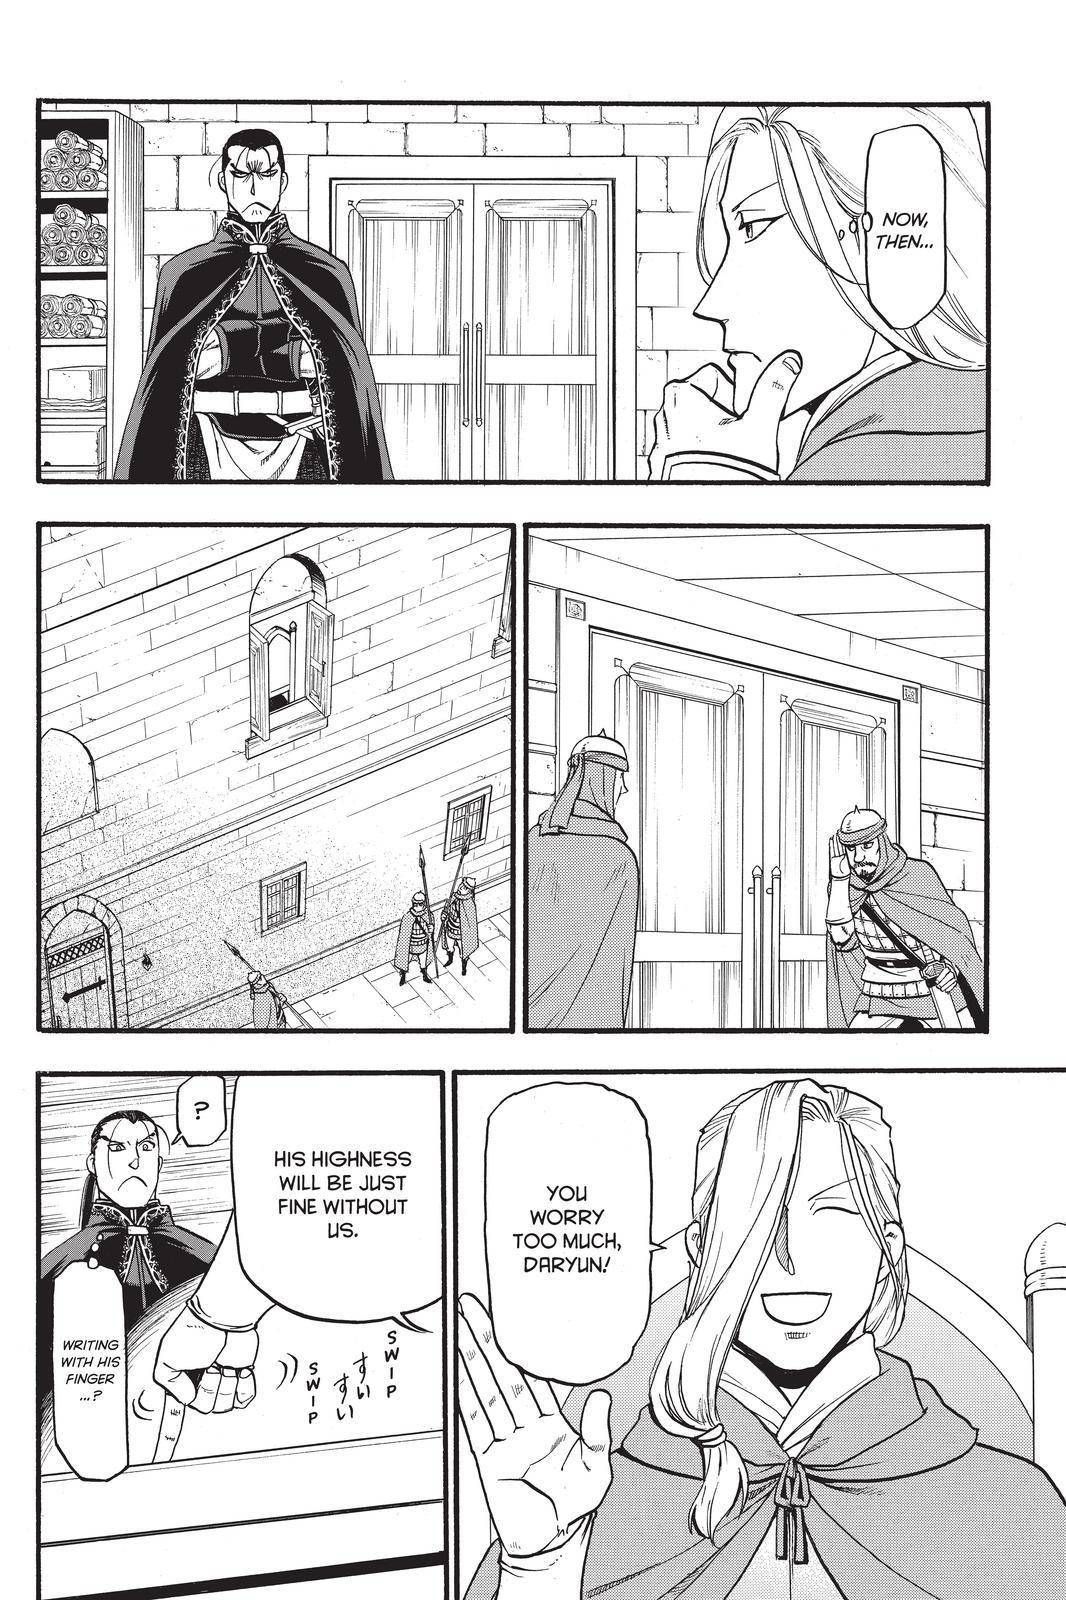 Arslan Senki (ARAKAWA Hiromu) chapter 92 page 6